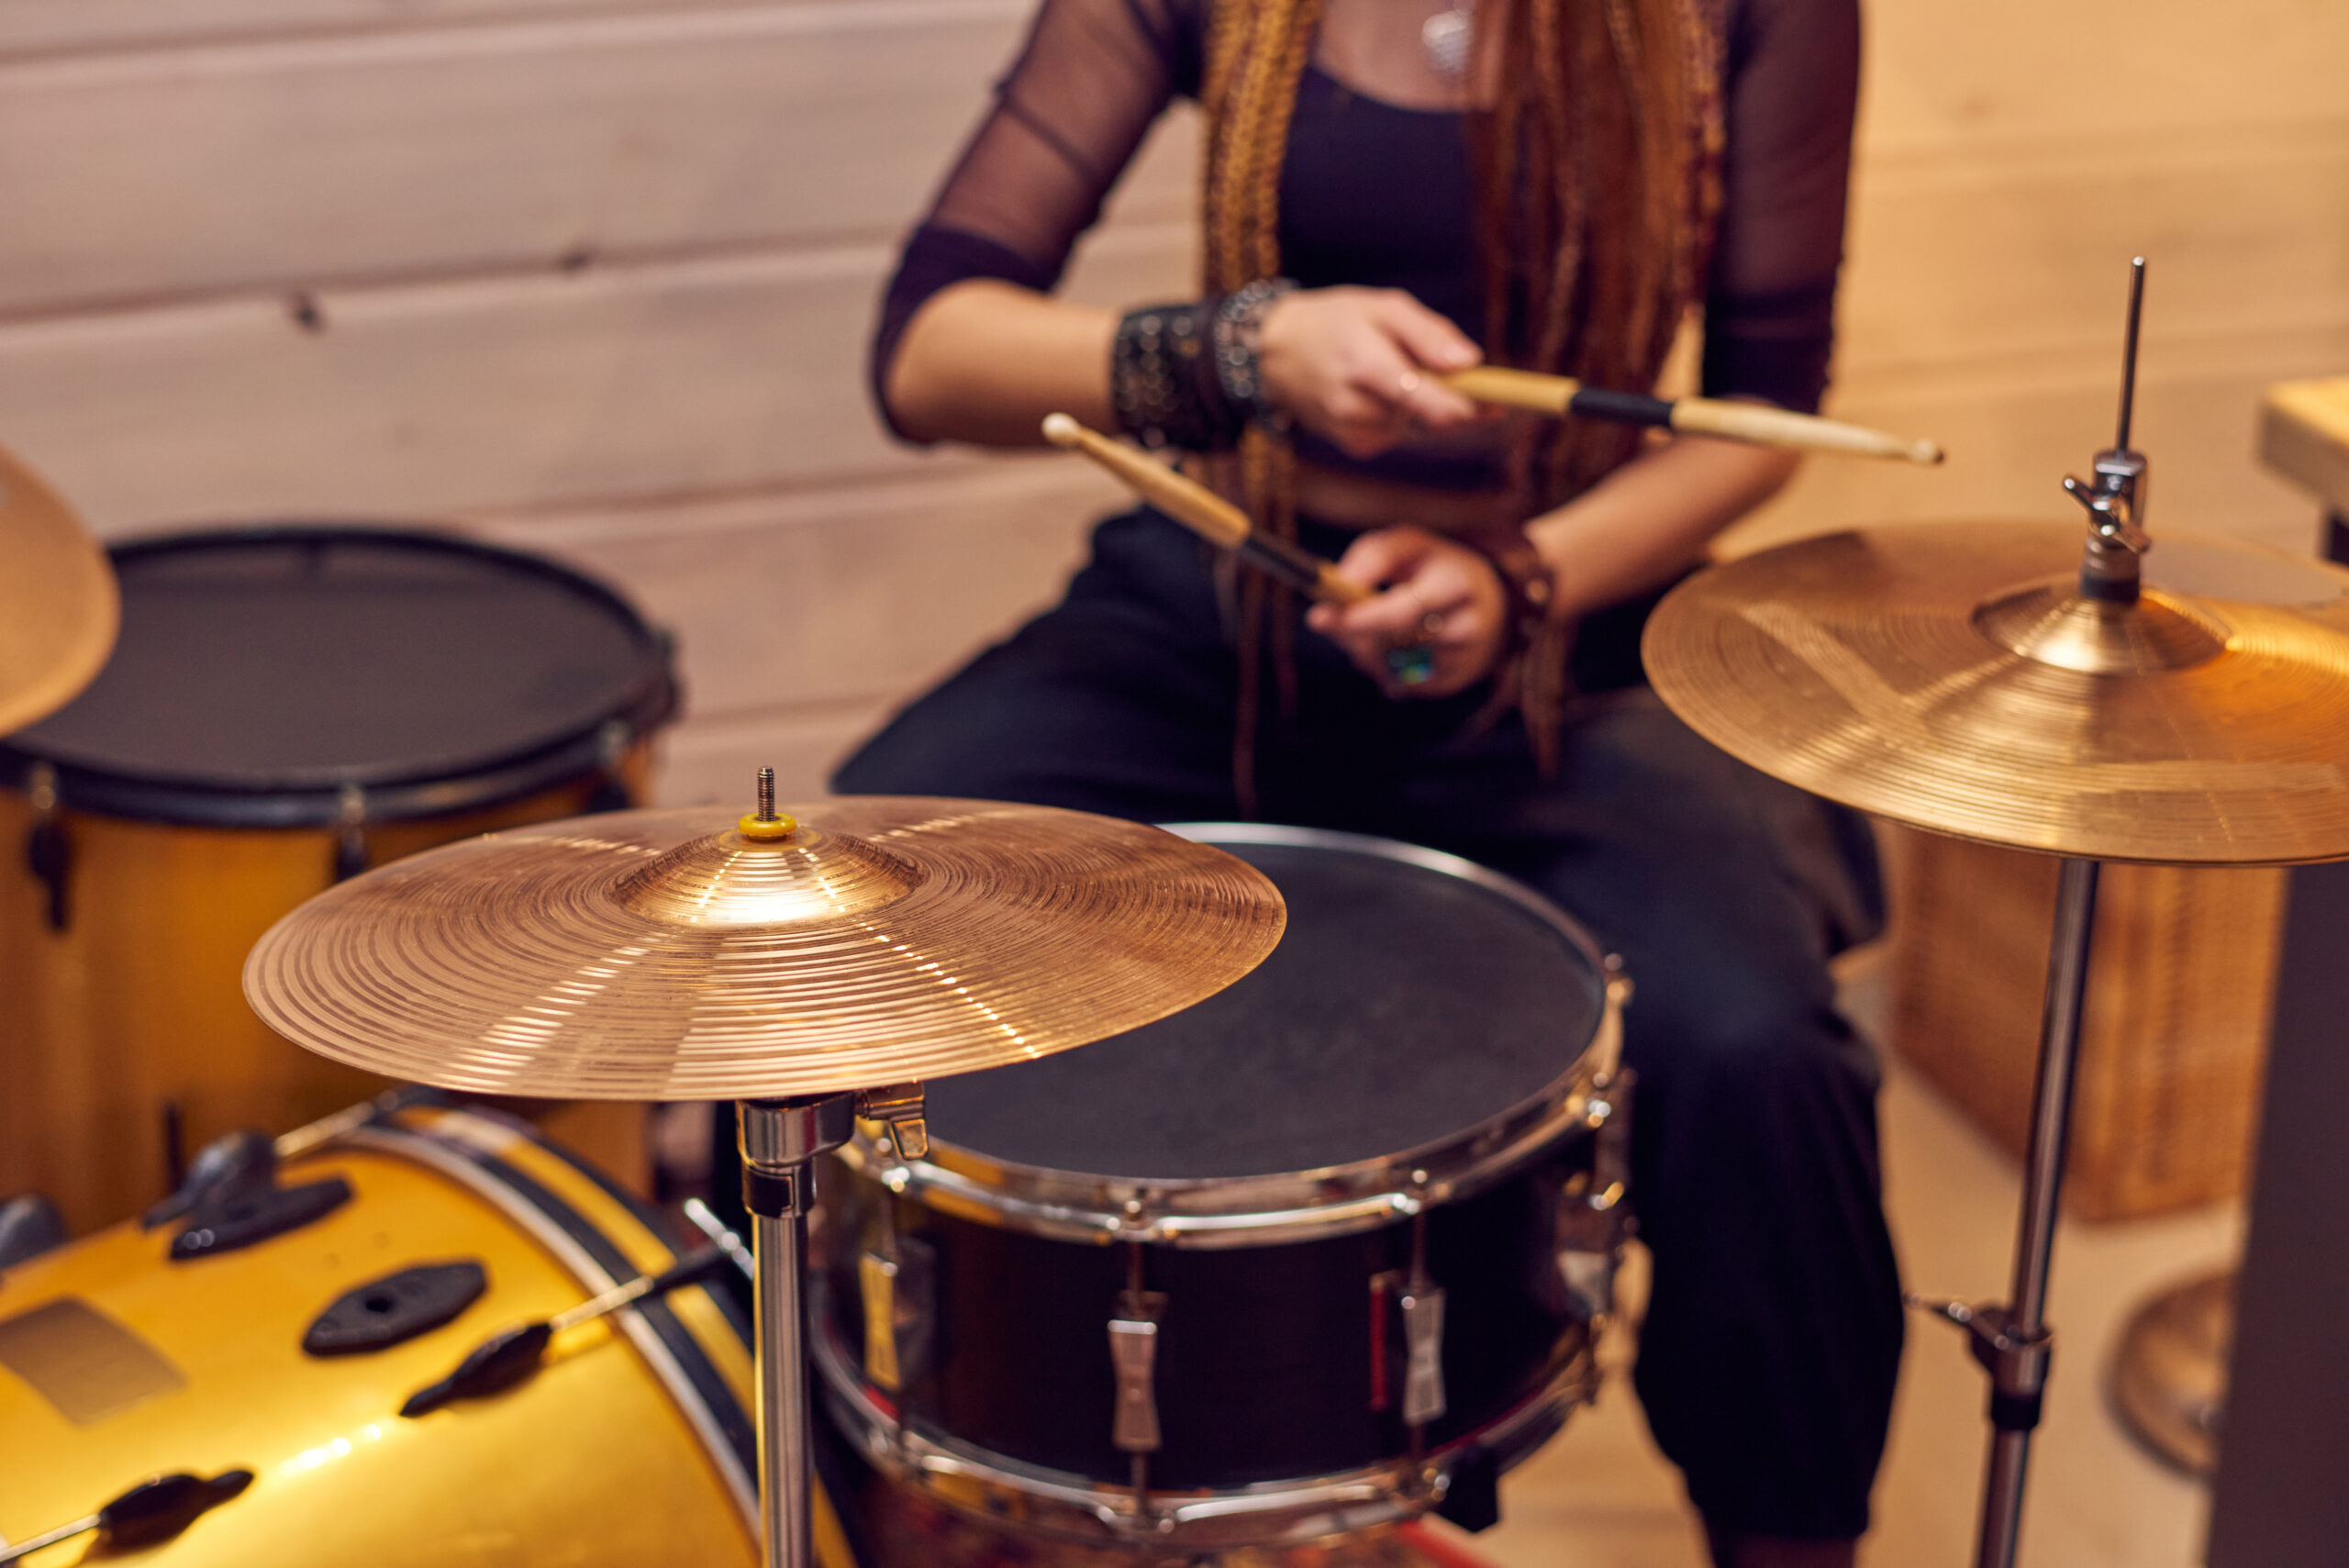 girl plays drum set